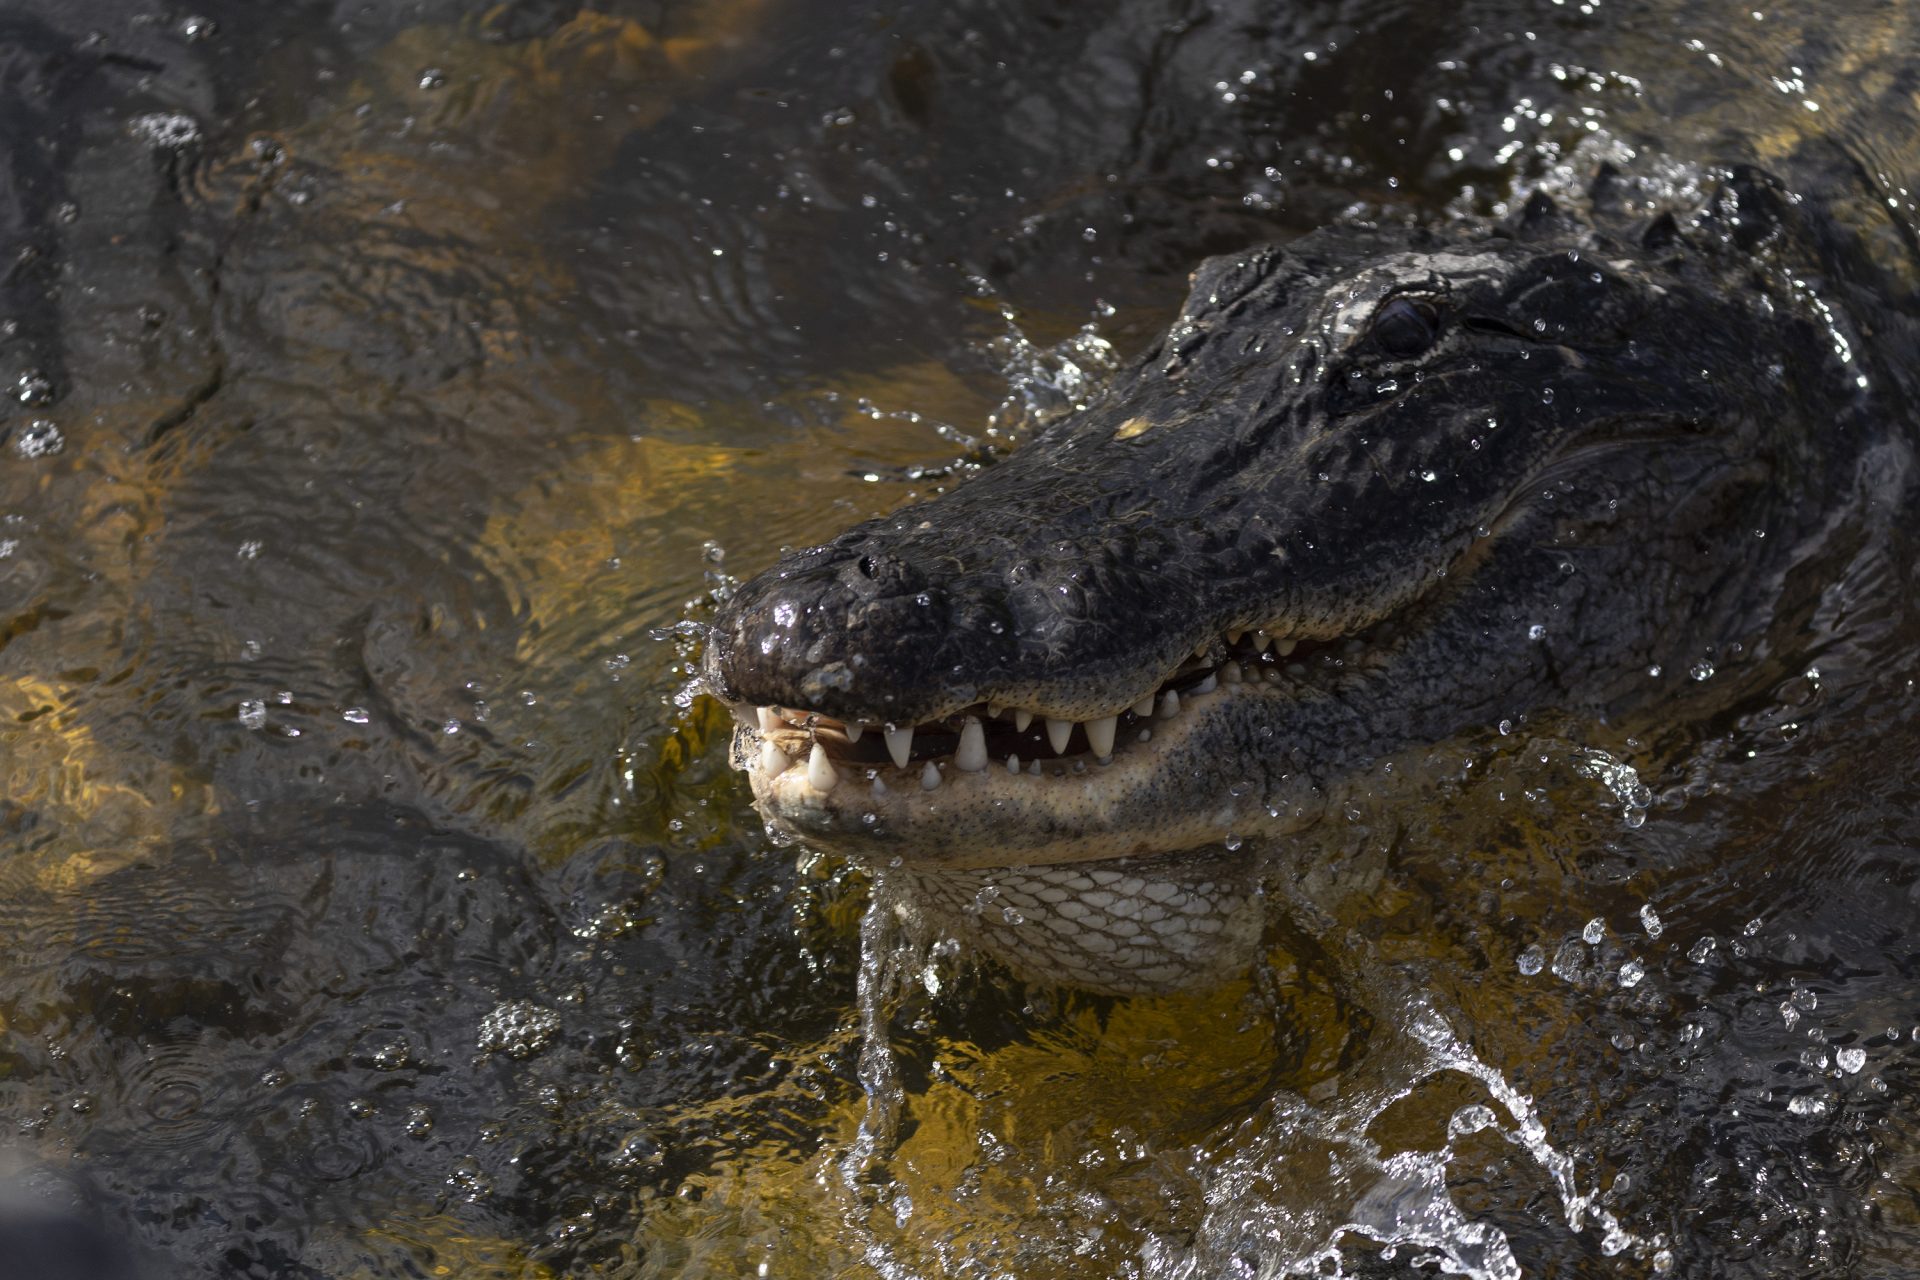 Person Dies After 11-Foot Alligator Yanked Them Inside Myrtle Beach Pond